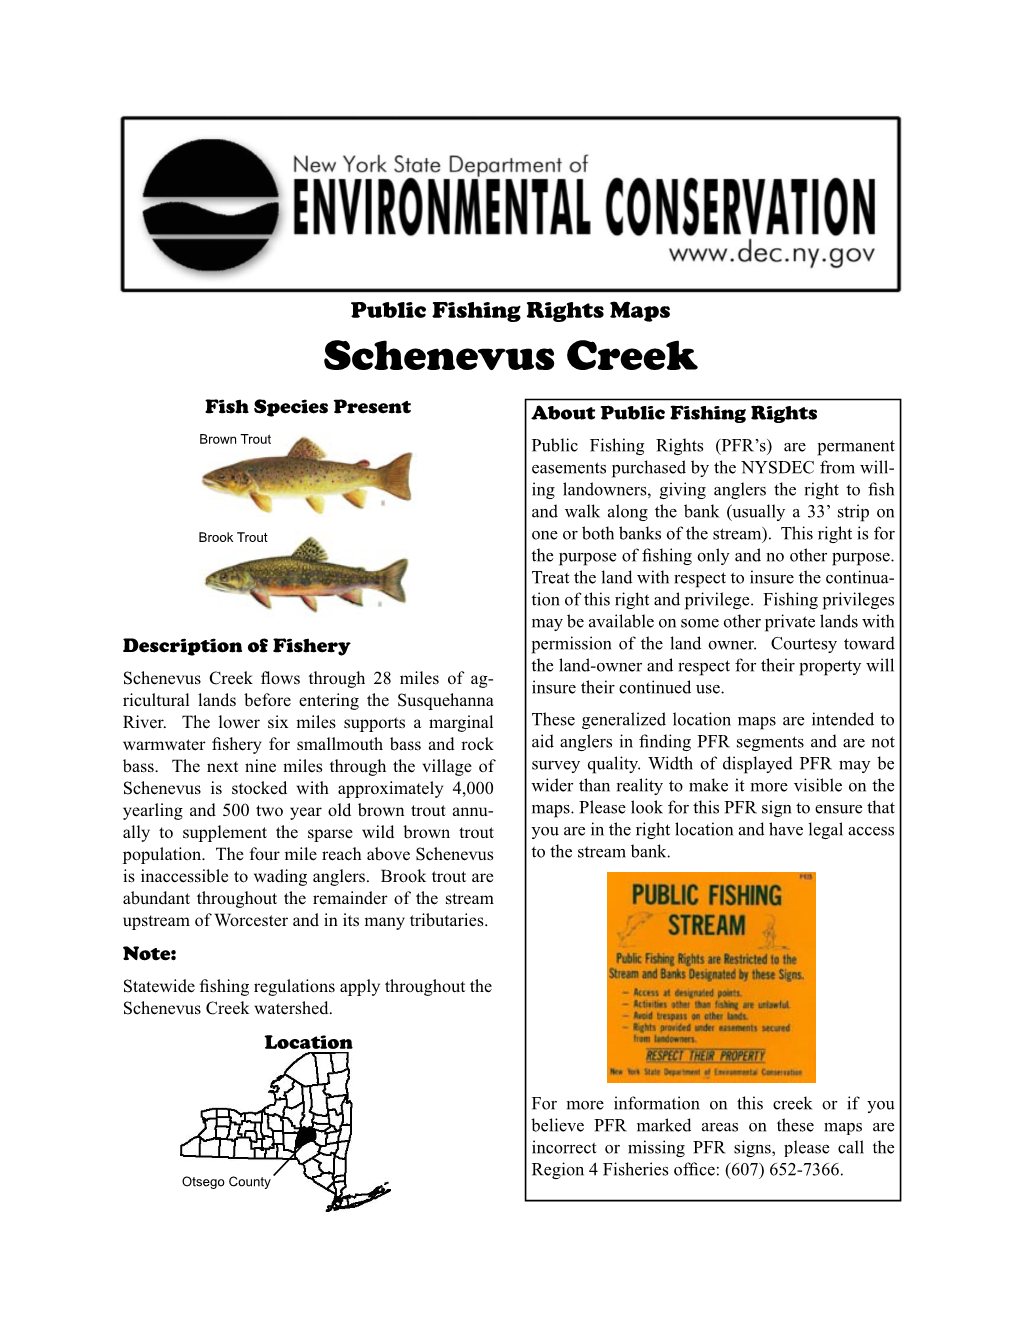 Public Fishing Rights Maps: Schenevus Creek